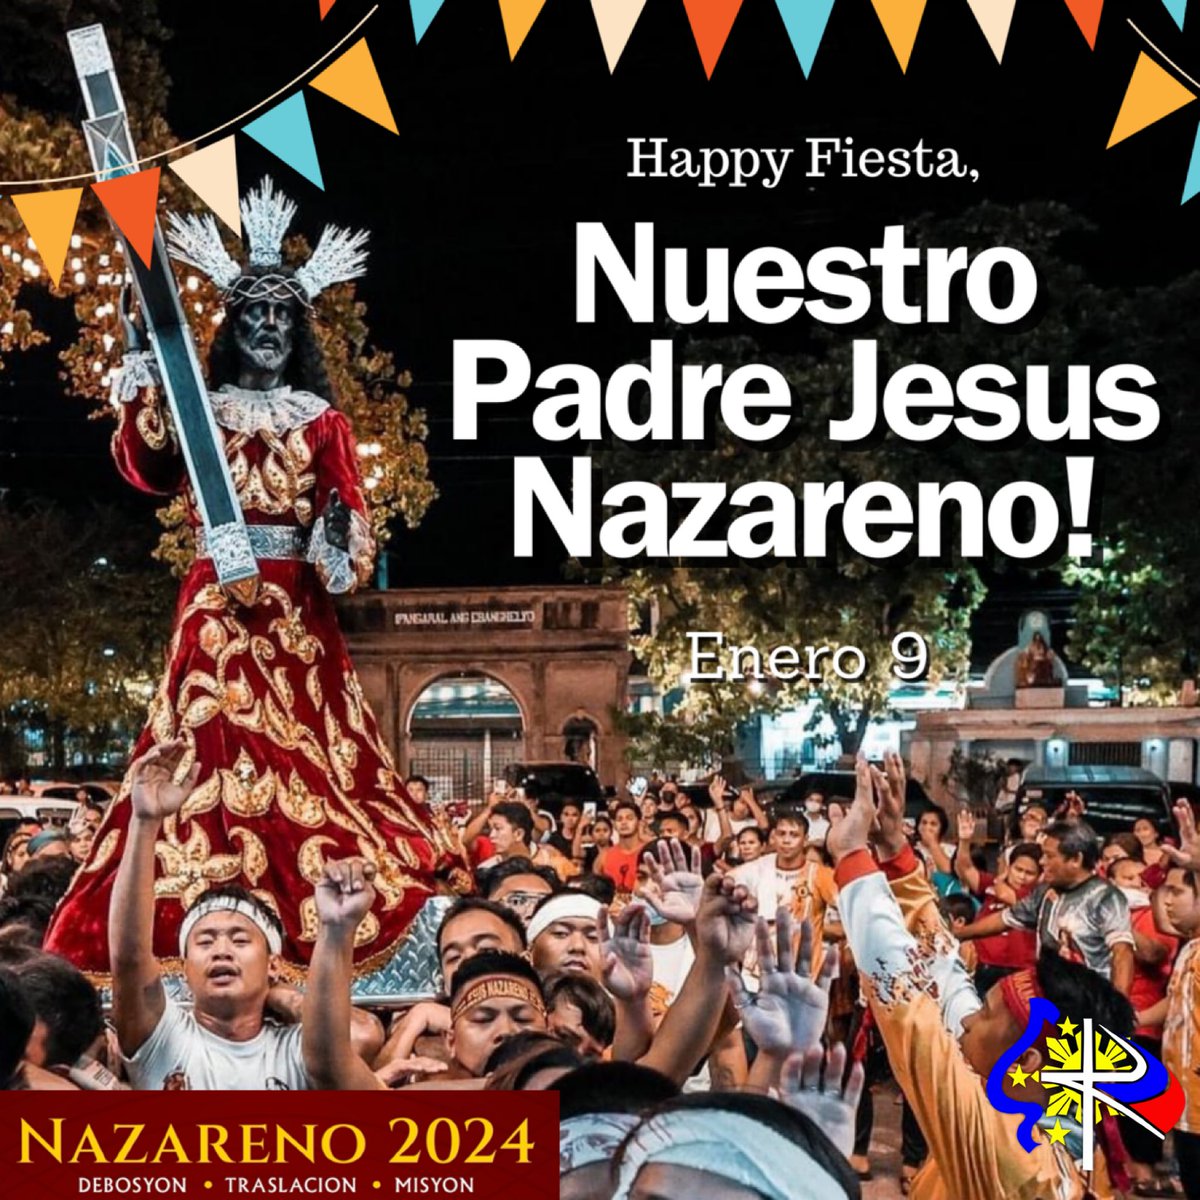 Happy Fiesta, Nuestro Padre Jesus Nazareno! VIVA! Walang Hanggang Pasasalamat! ❤️

#Traslacion2024 #Nazareno2024 

📸 Kuya Jahbee Cruz